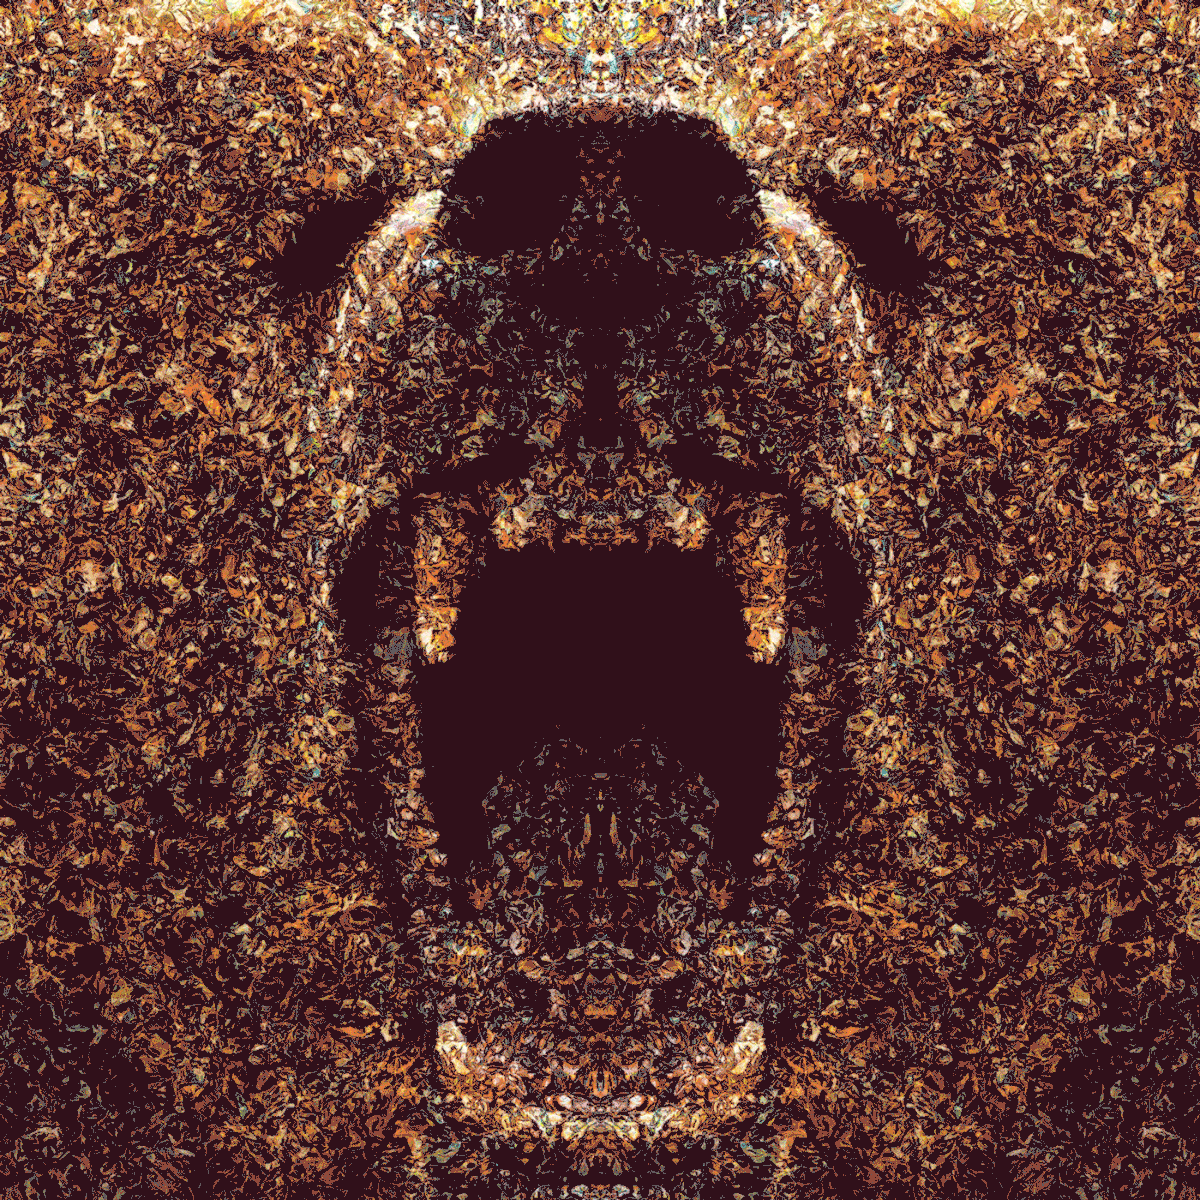 Pragyan Uprety animals animal art nifty graphics generative art generative graphic art abstract bear lion